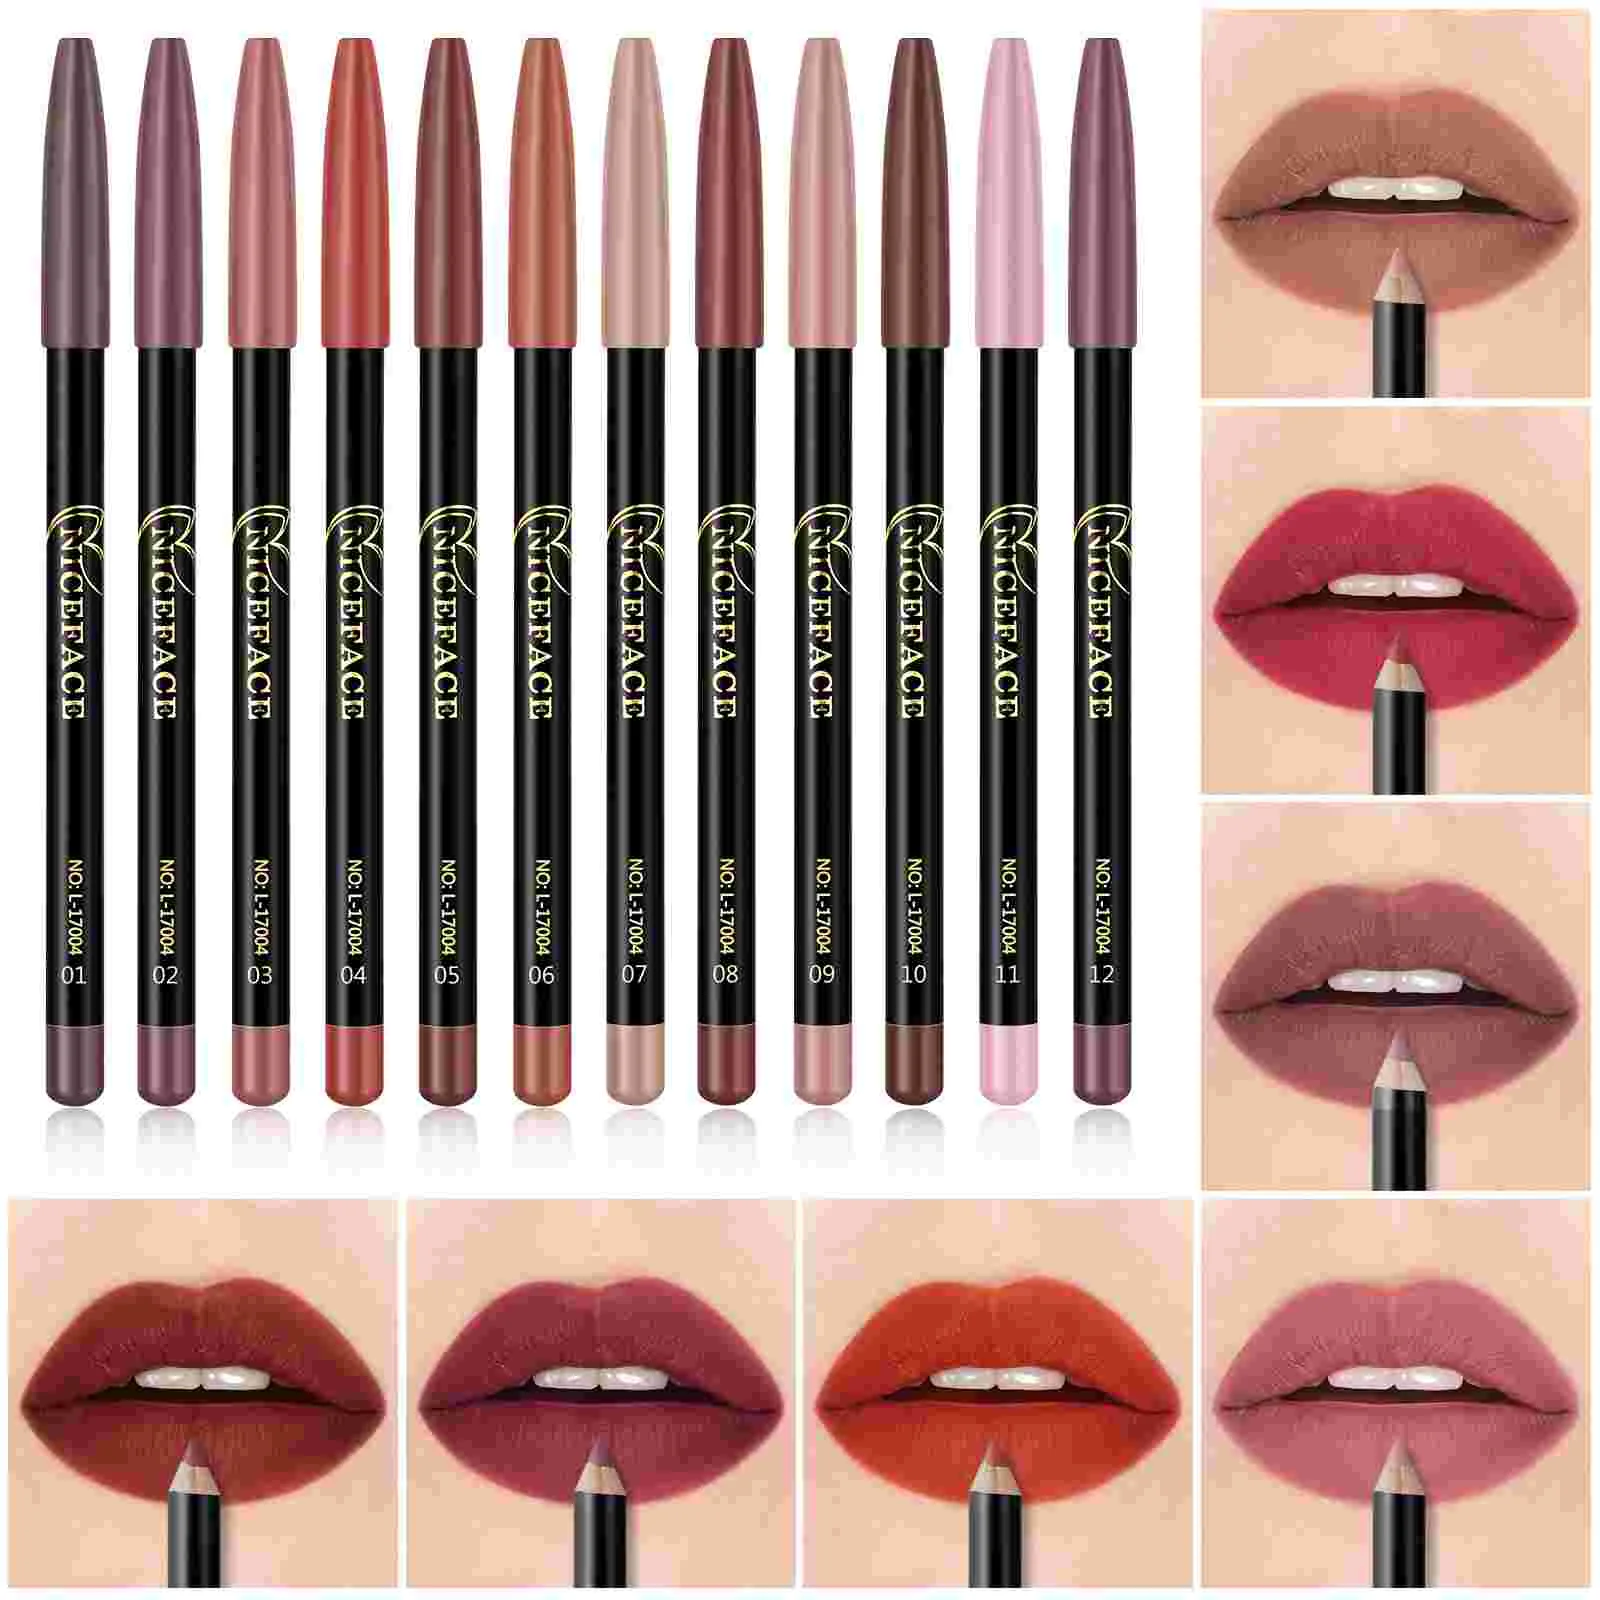 

Minkissy 12Pcs Makeup Lip Liner Set Waterproof Lip Line Pencils 12 Colors Lip Shaping for Women Lady Fashion and Lipstick